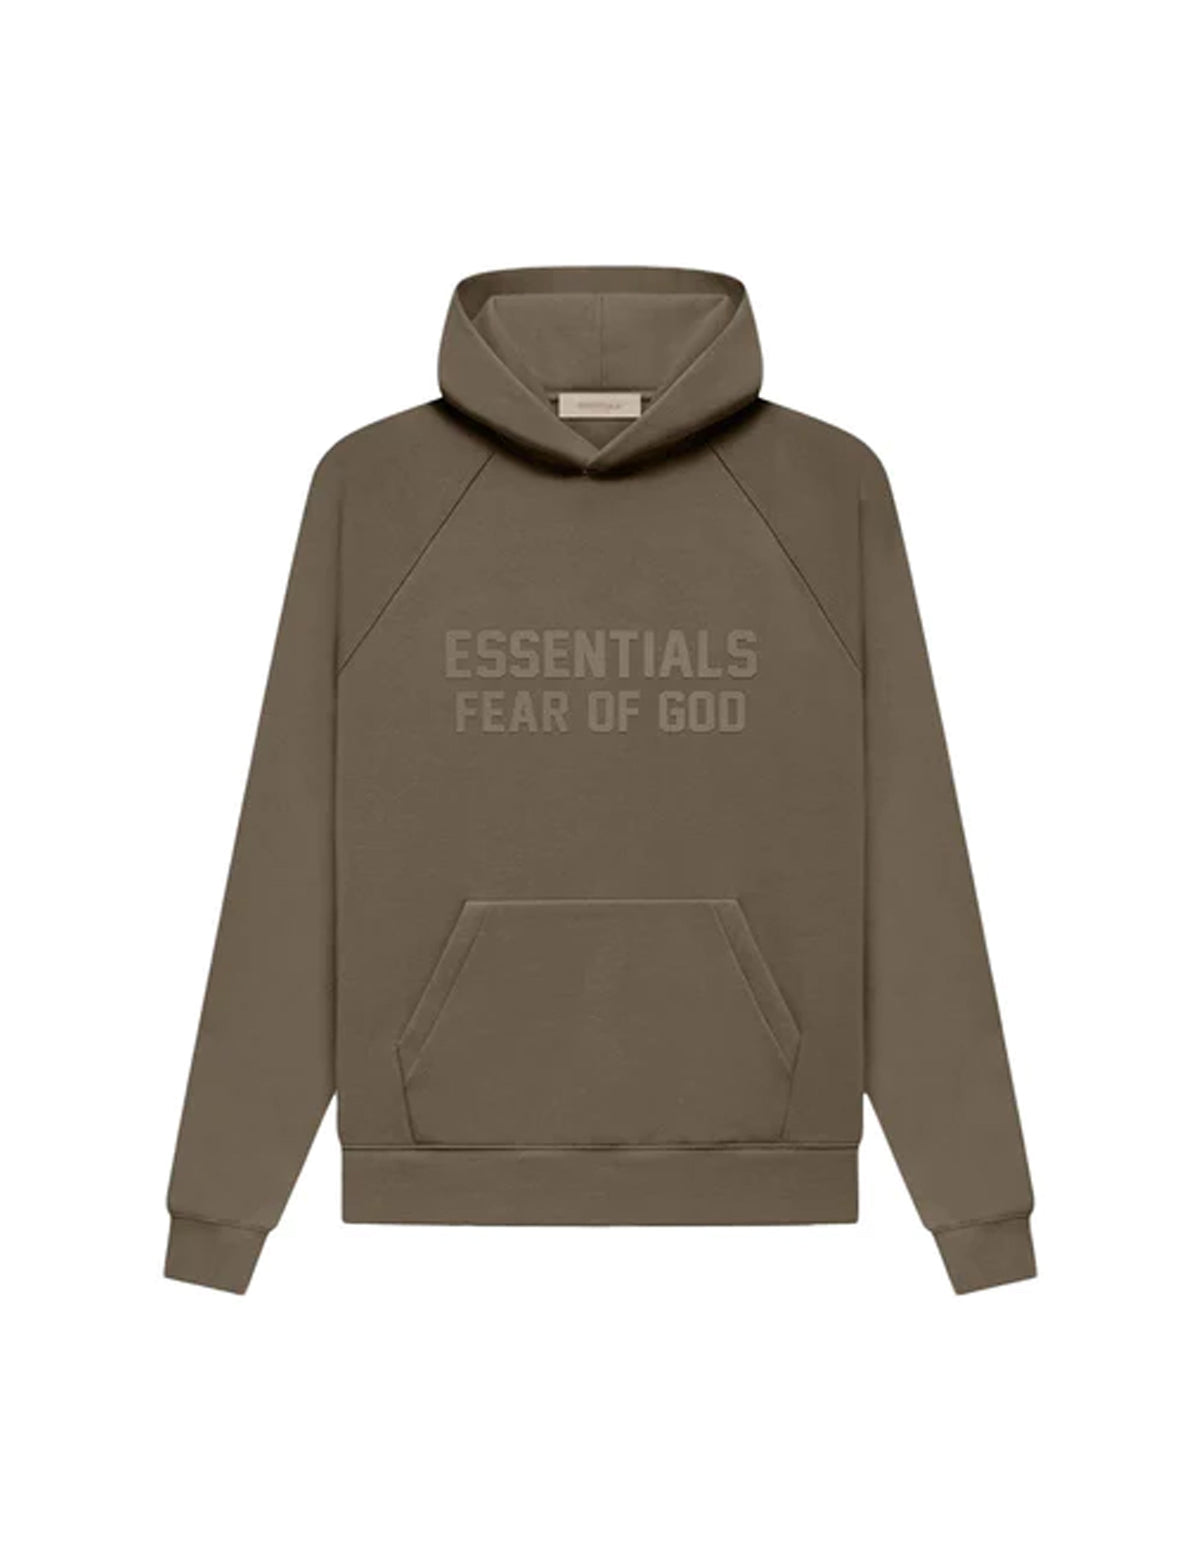 Fear Of God Essentials "Wood" Hoodie